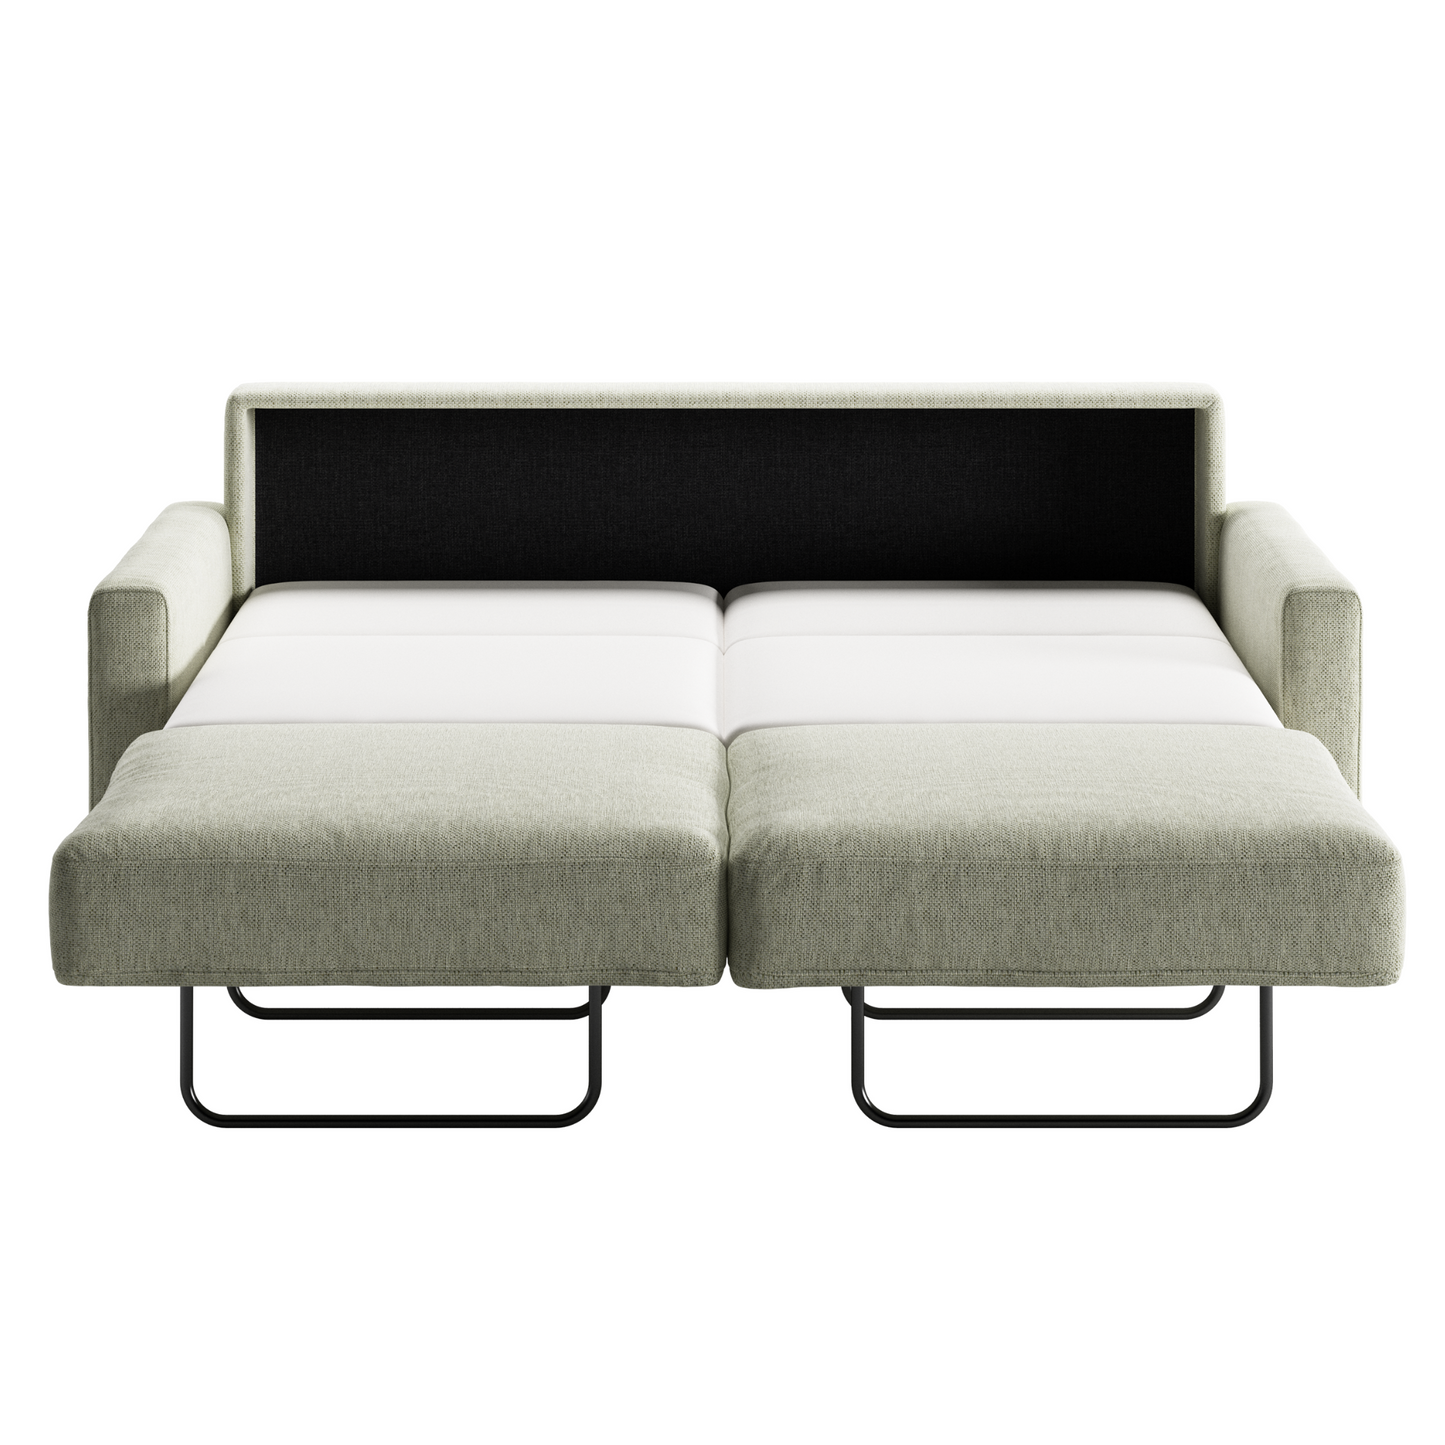 	Luonto Nico Queen Sleeper Sofa Quick Ship Program Loule 616 Fabric (beige) Open Sleeper